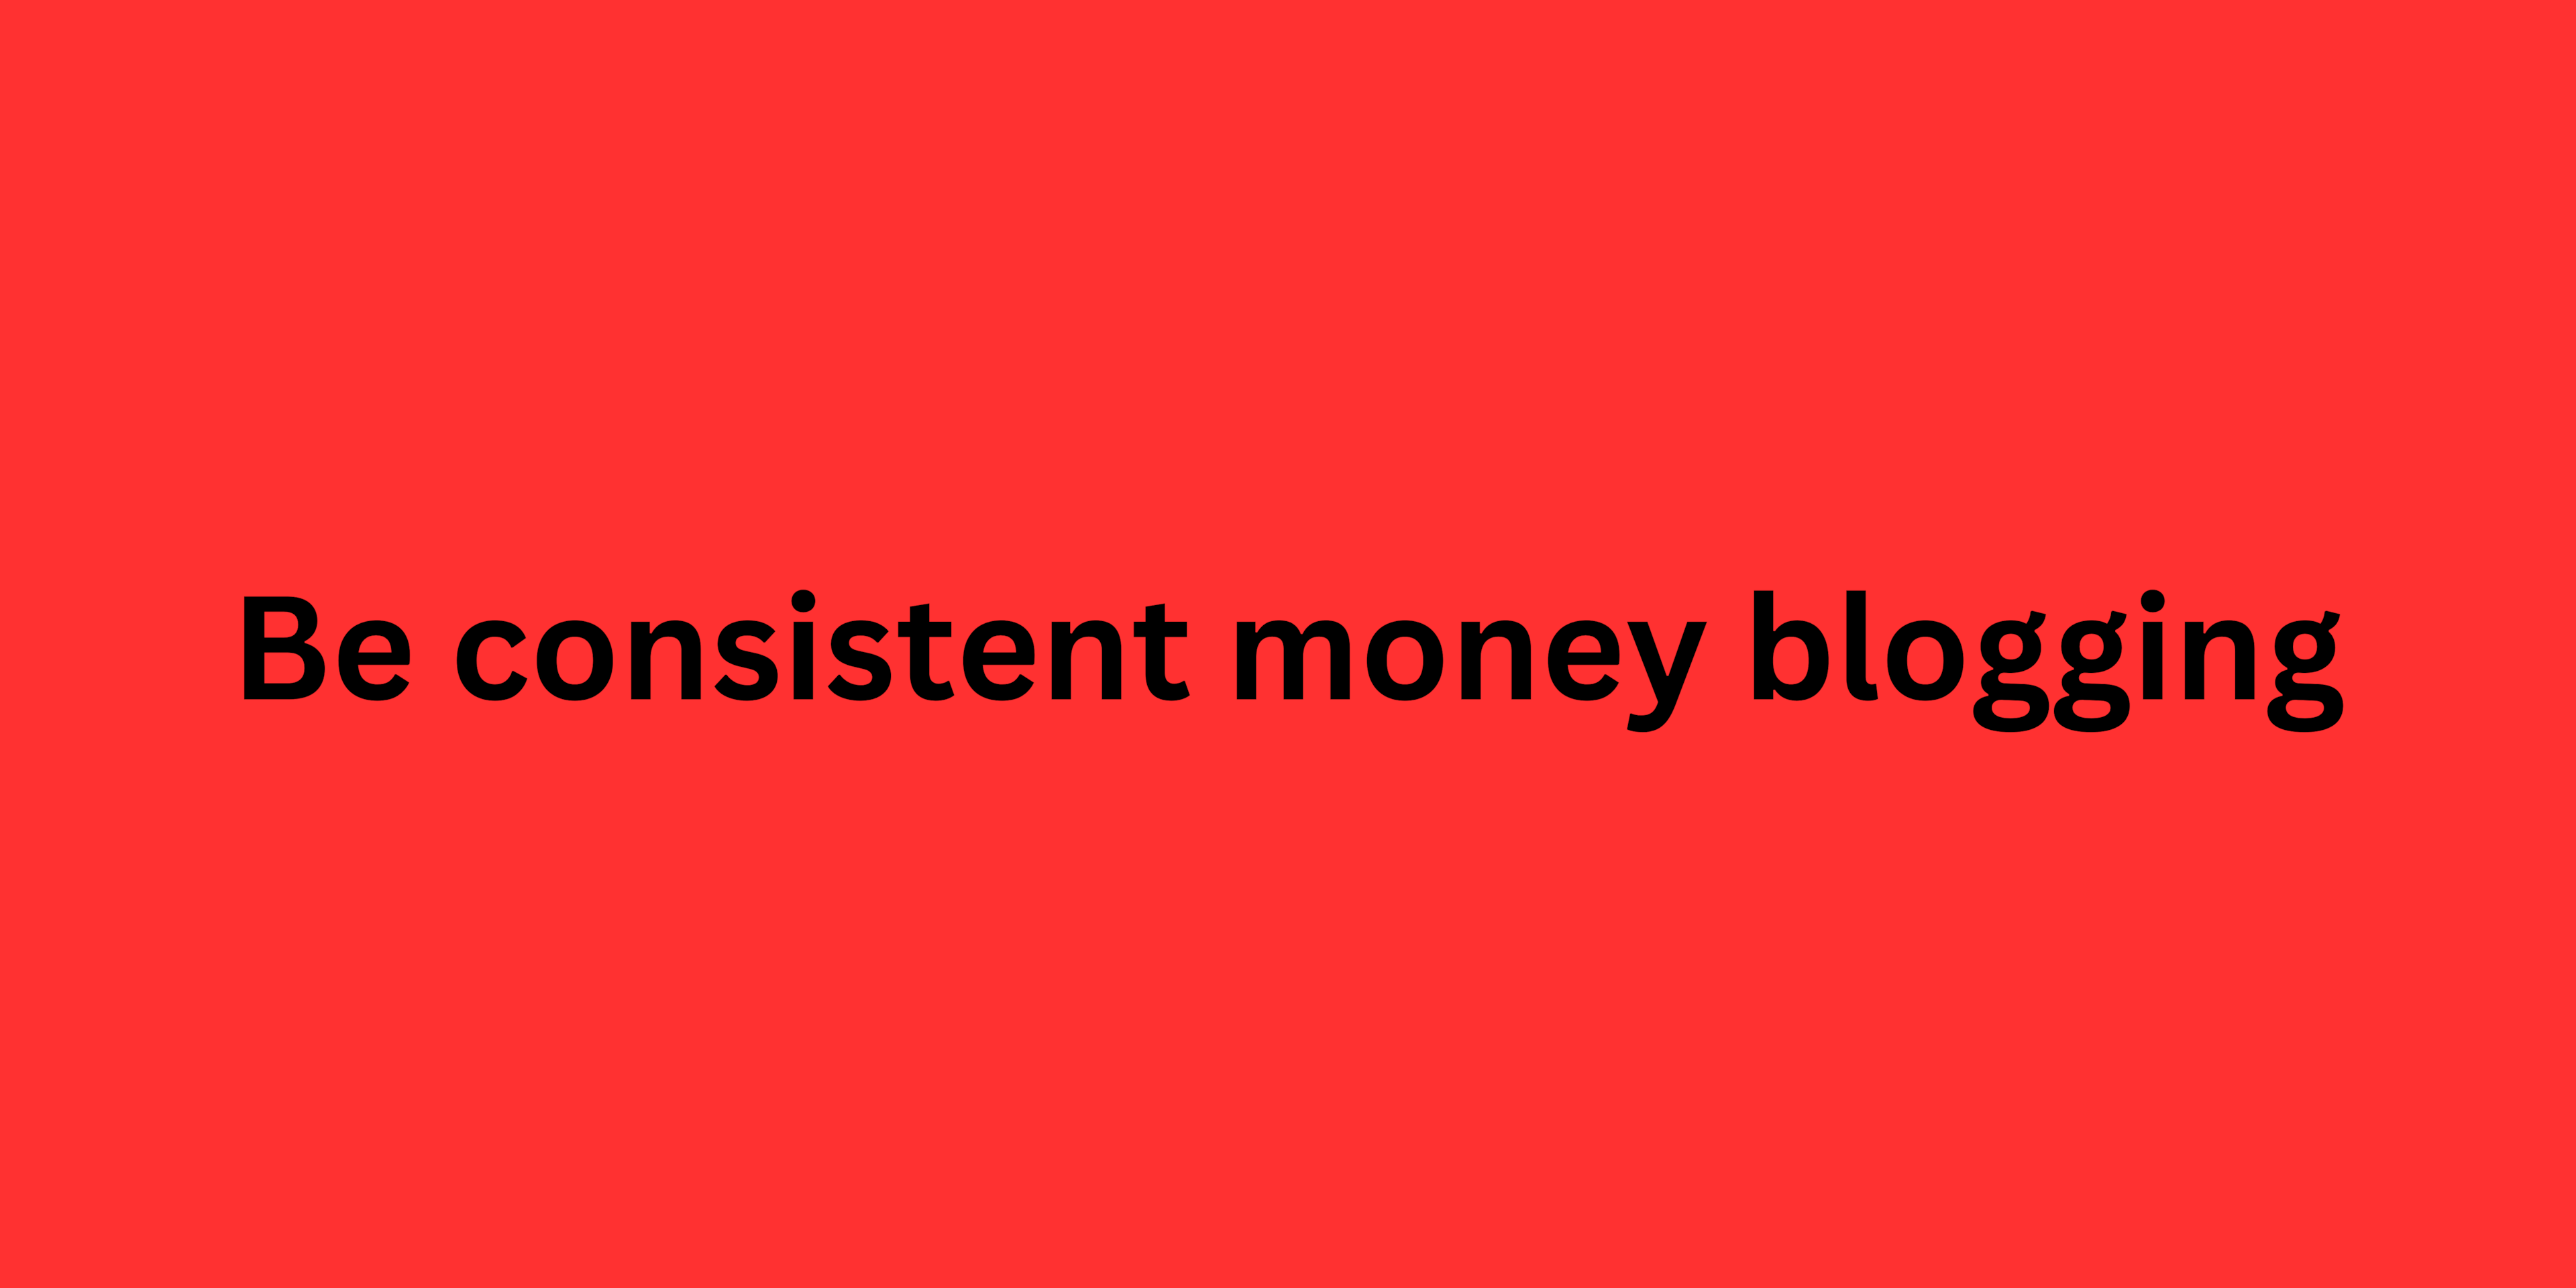 Be consistent money blogging: